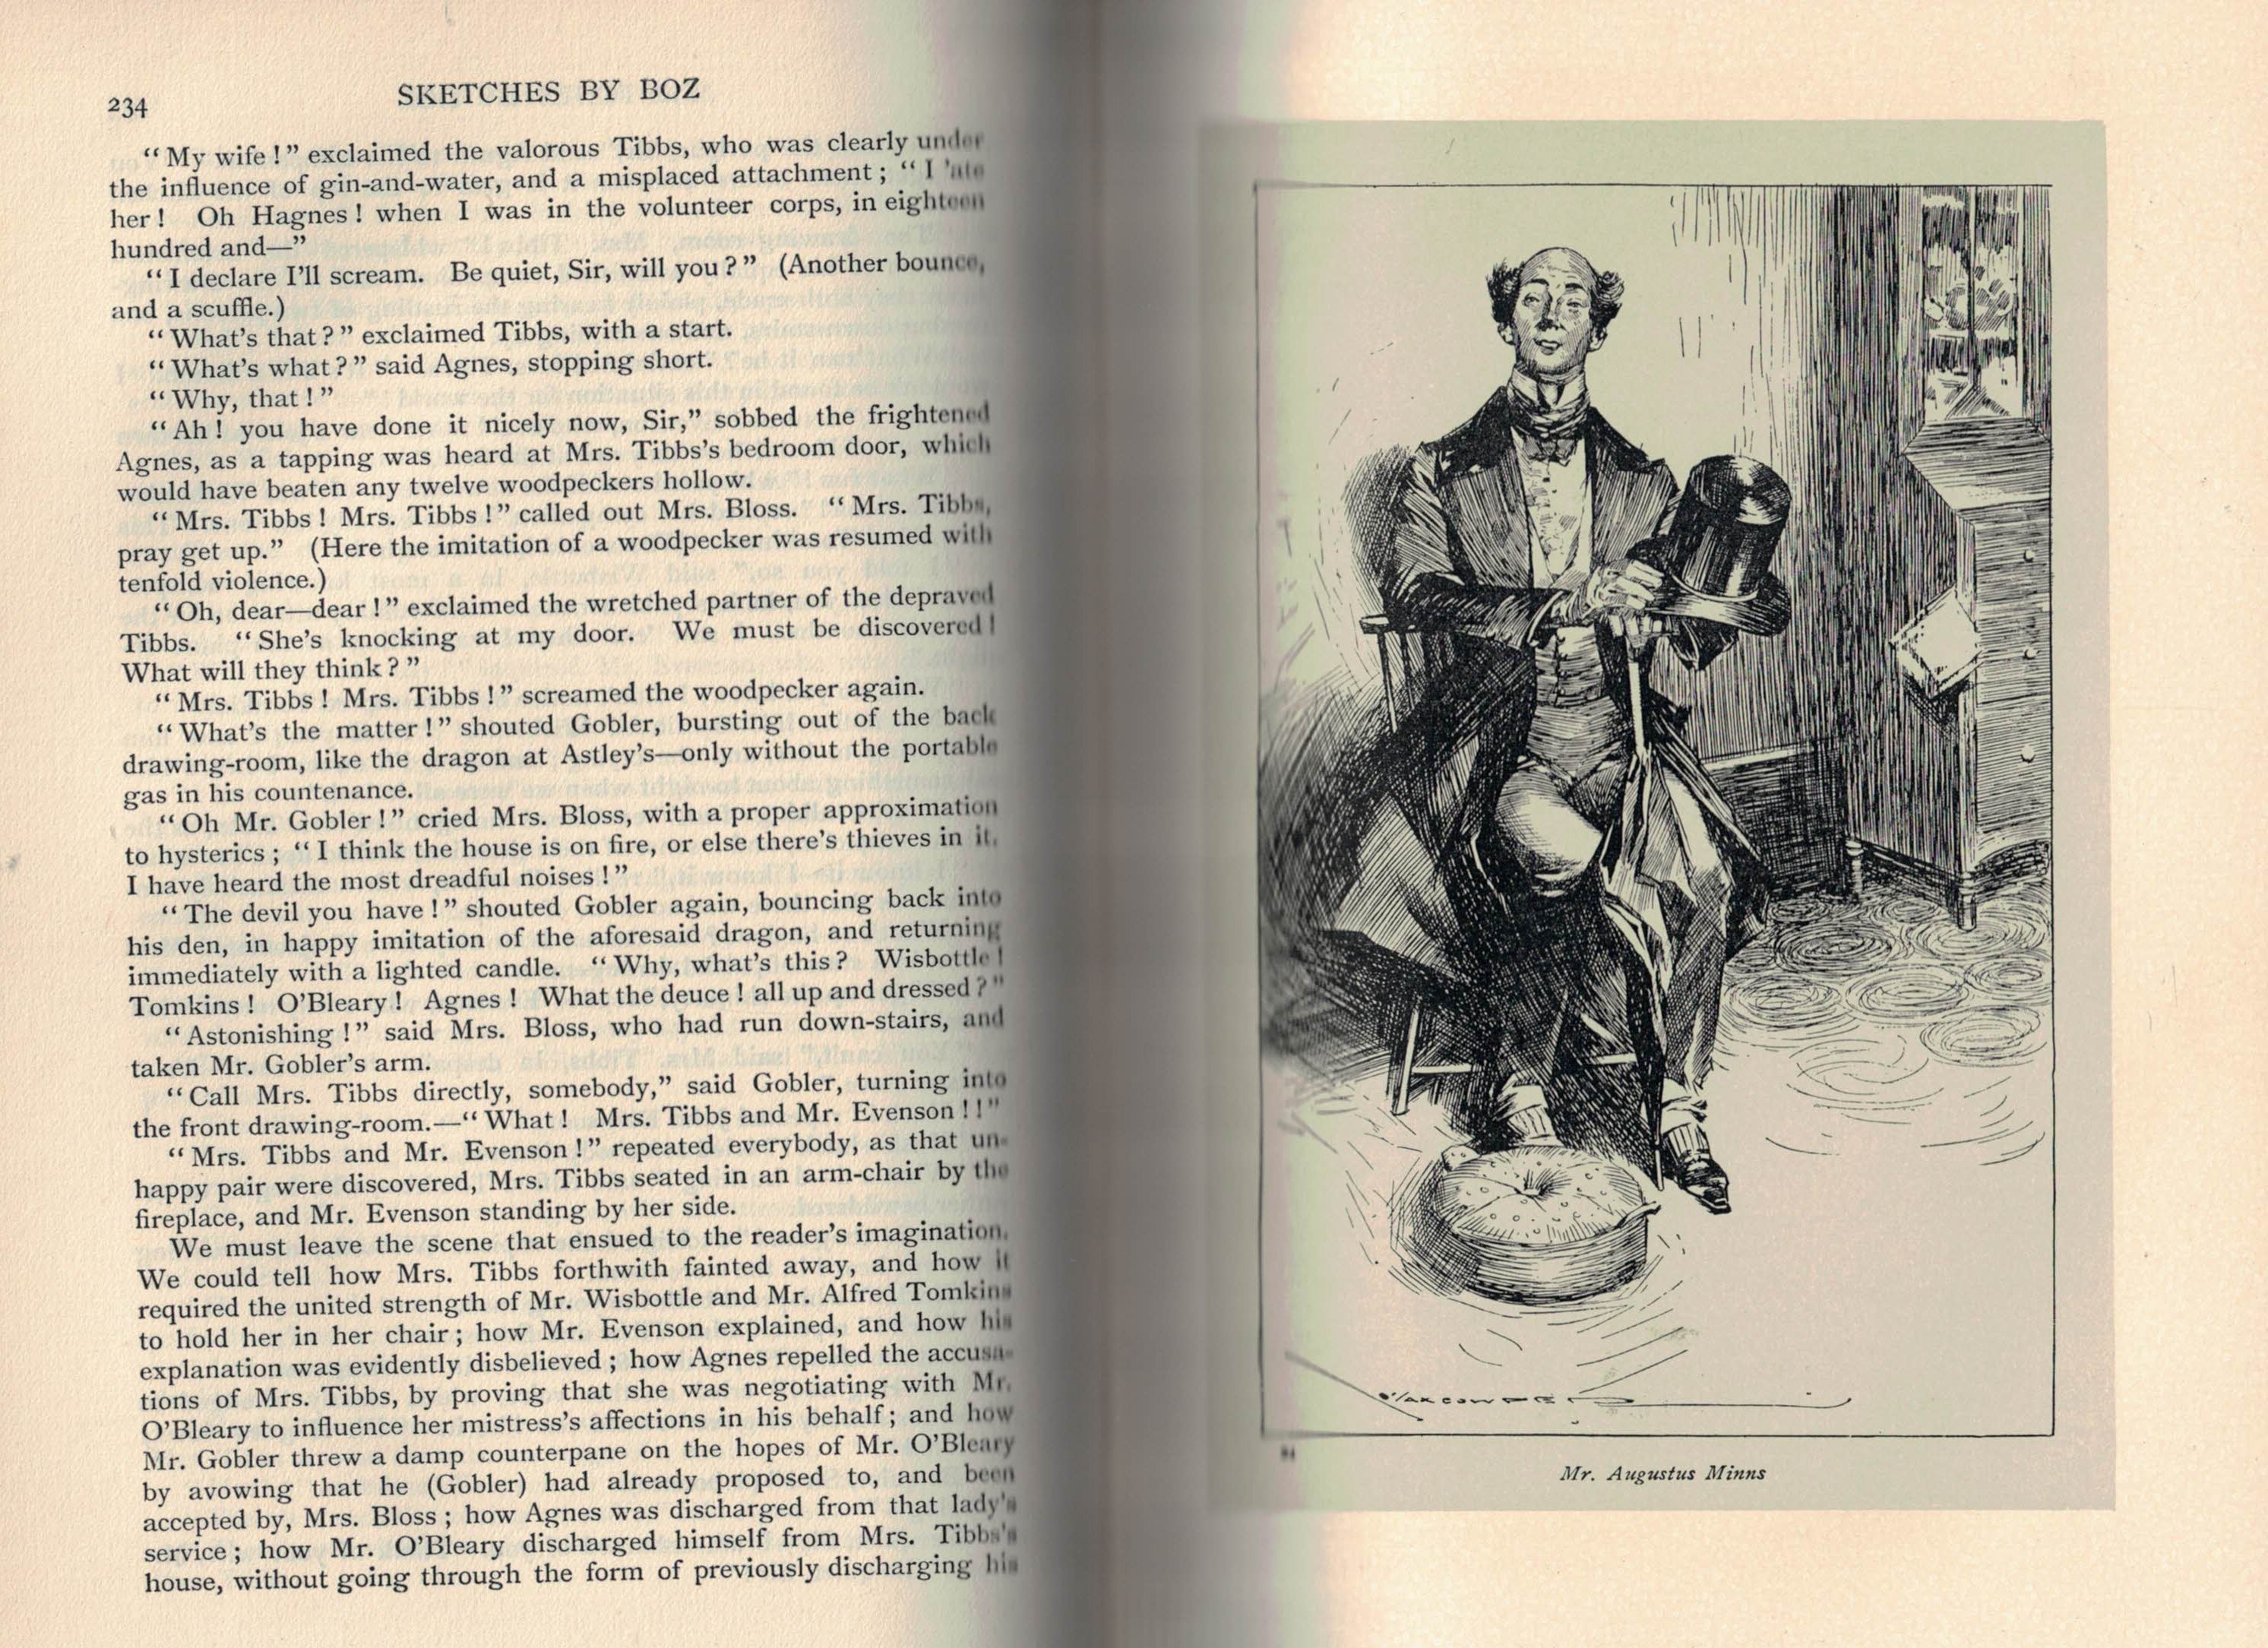 The Works of Charles Dickens. Quarter-leather Gresham Standard Edition. Complete 20 volume set.